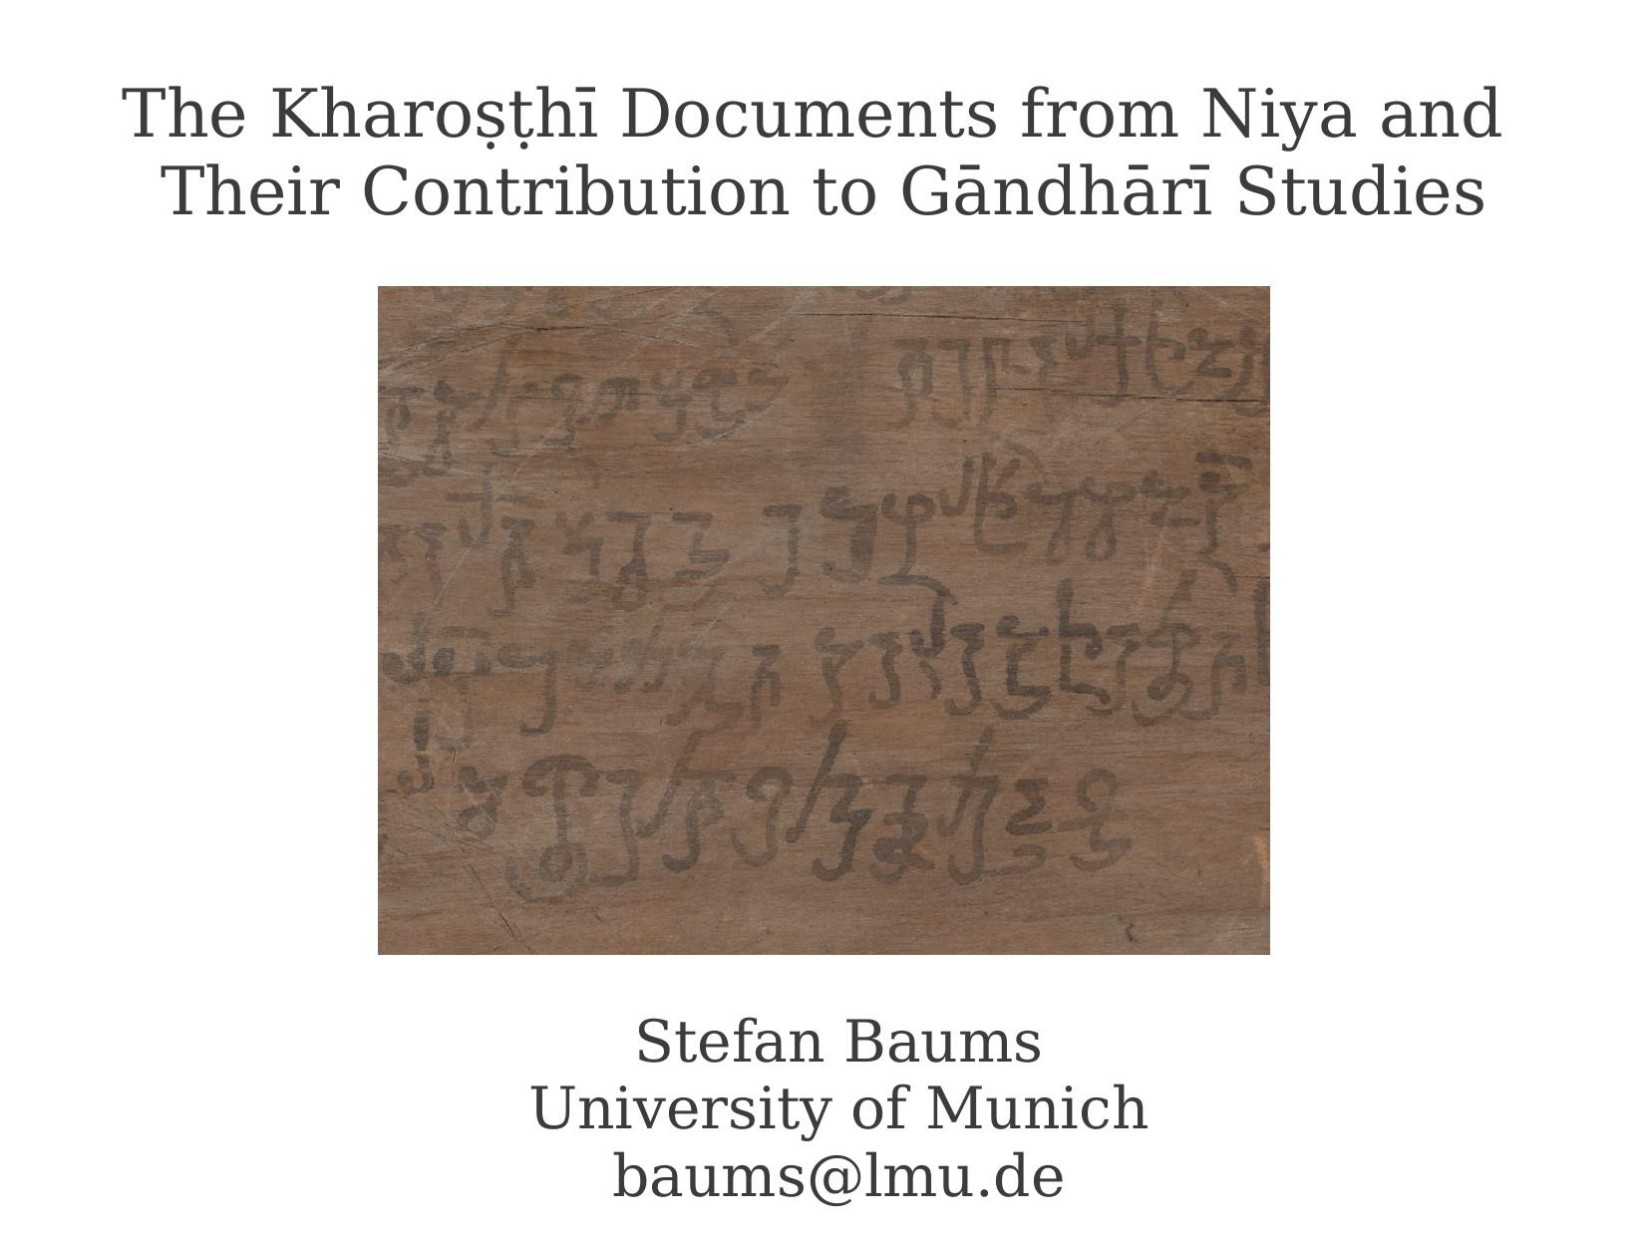 The Kharosthi Documents from Niya and Their Contribution to Gandahari Studies